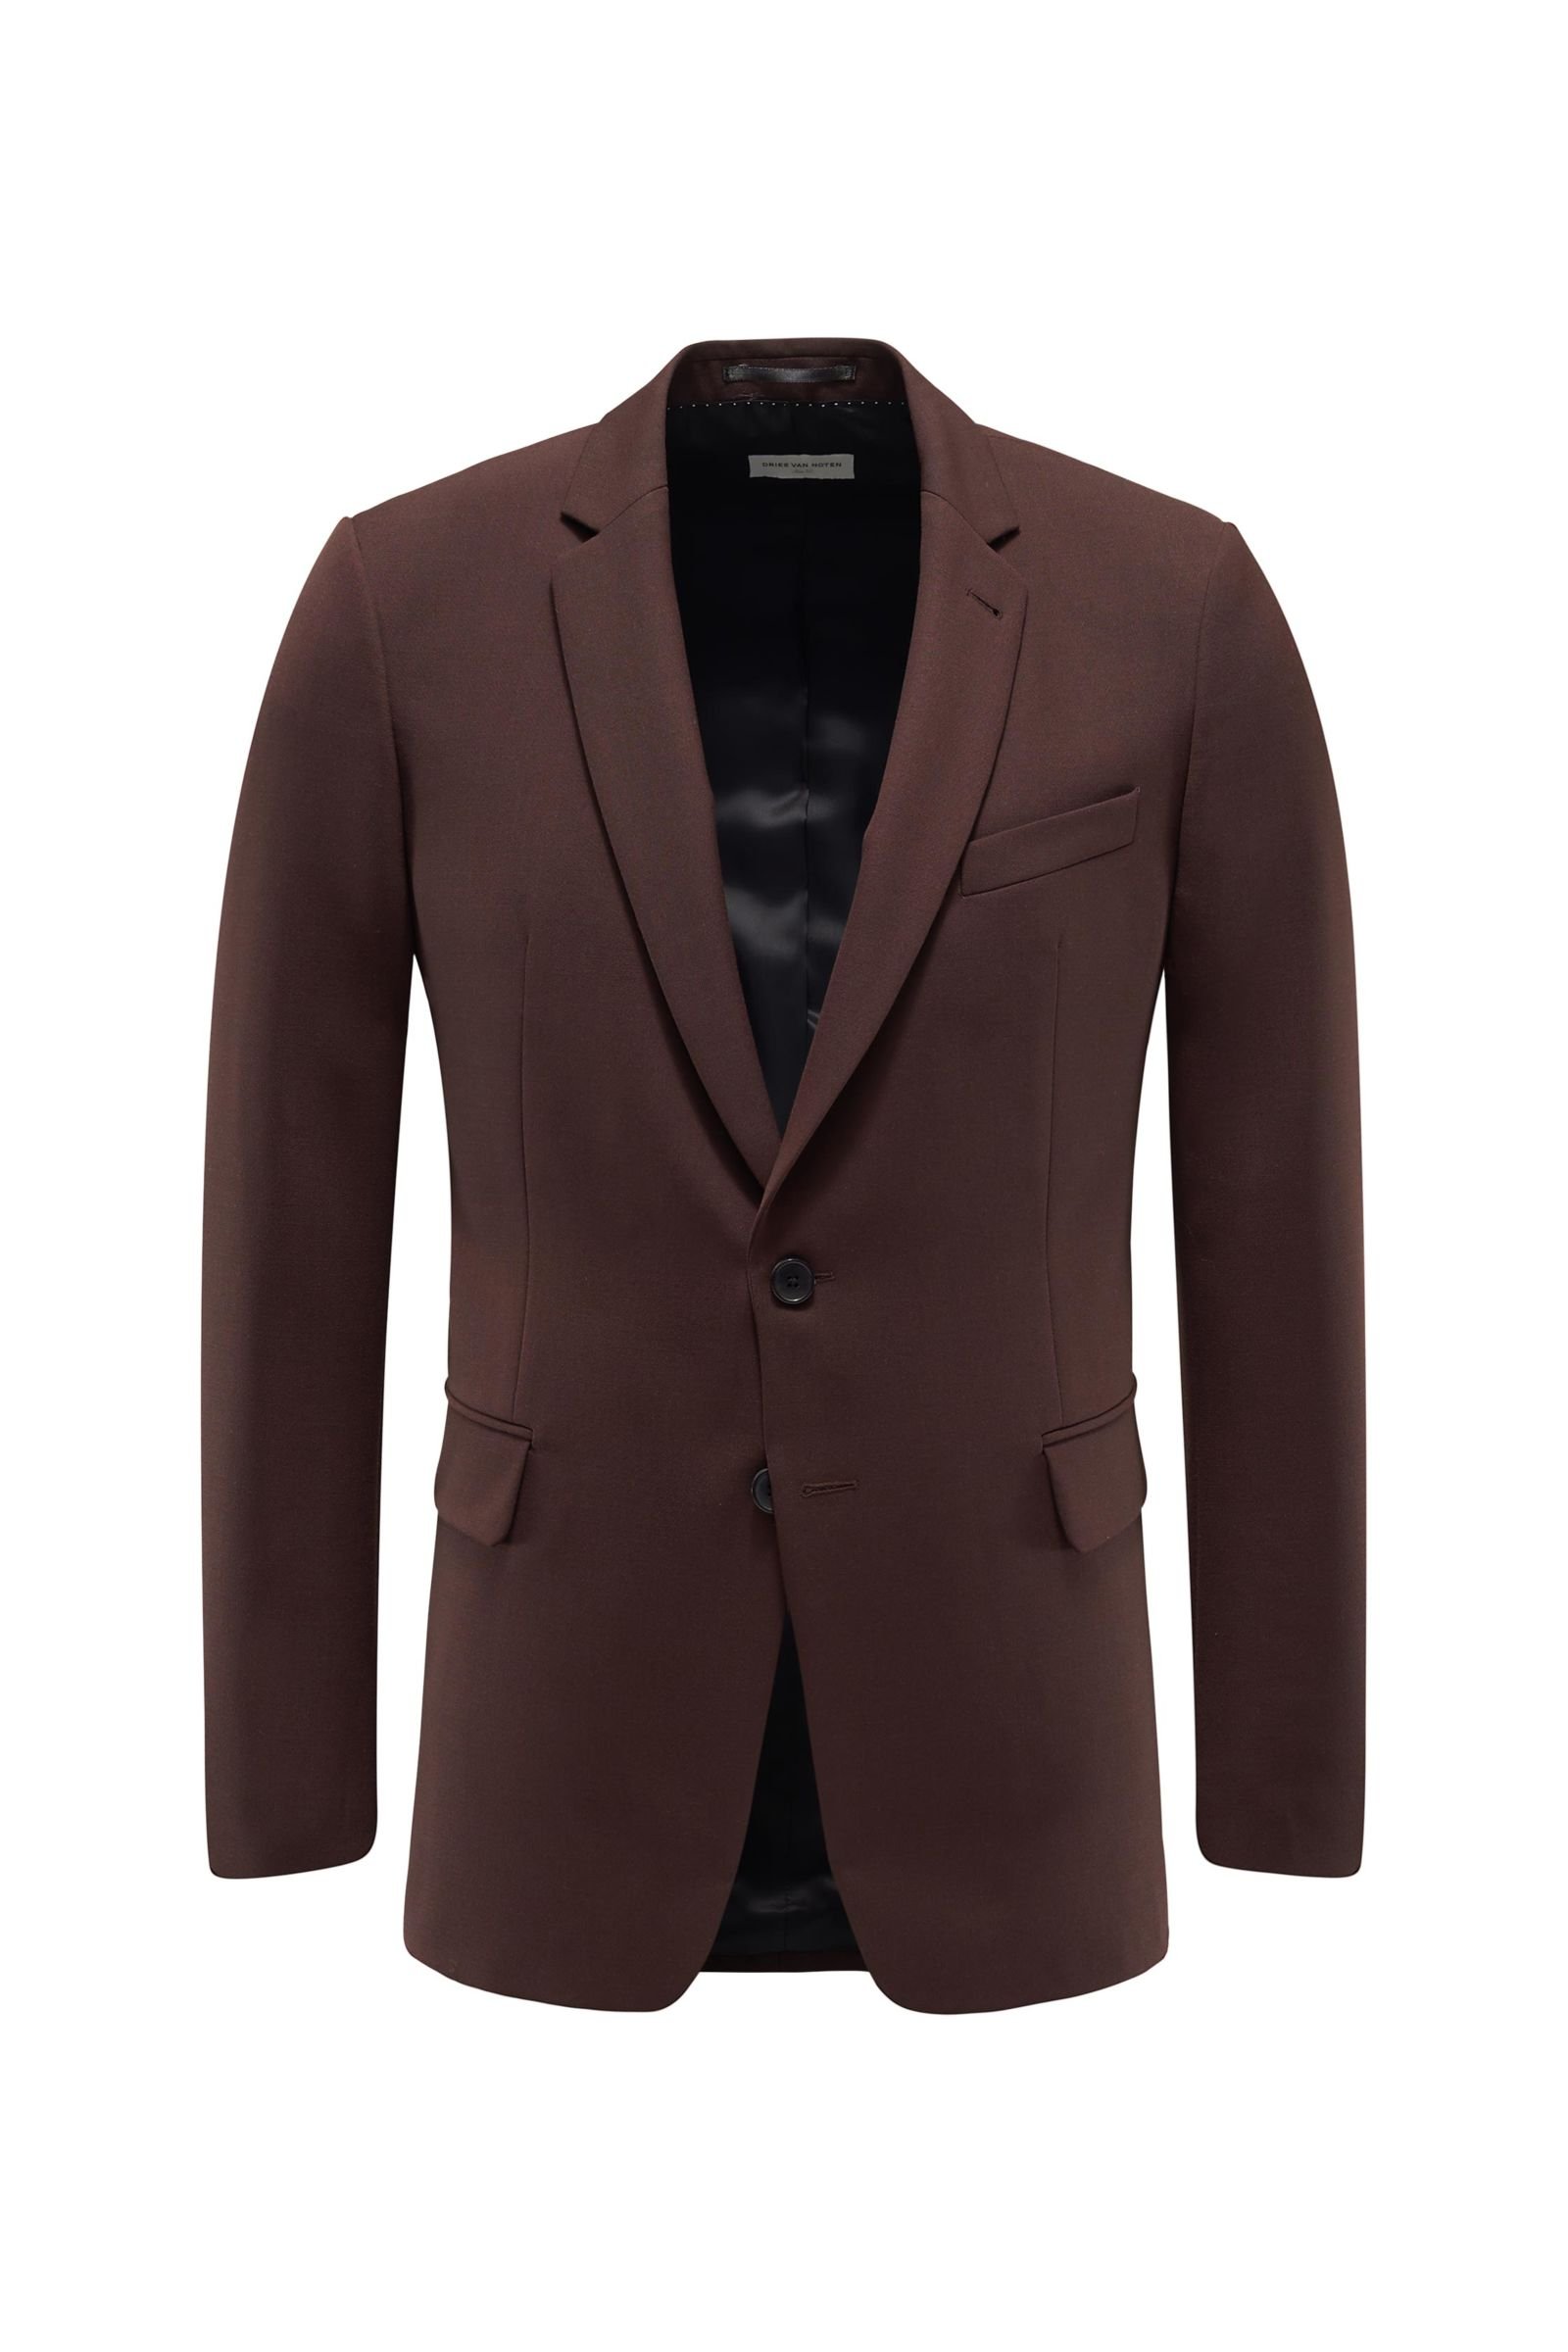 Smart-casual jacket 'Blaine' dark brown